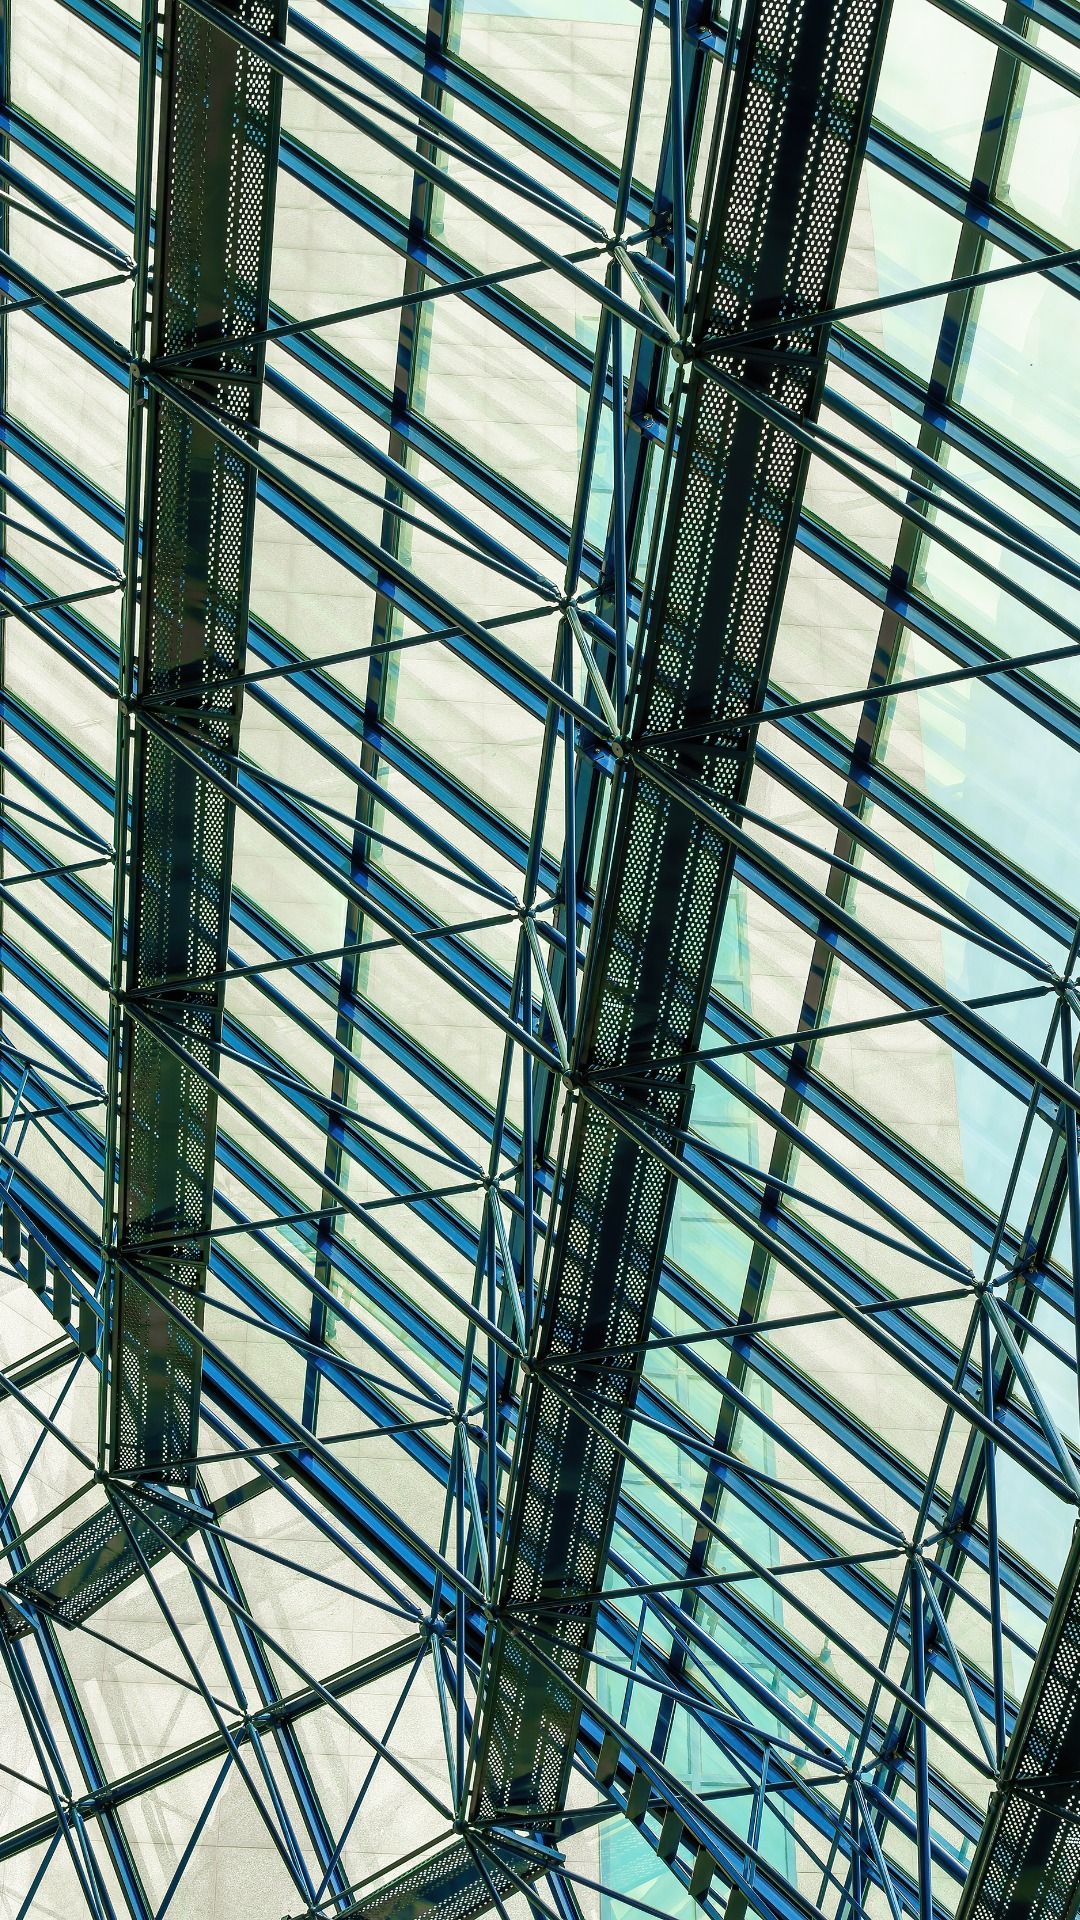 Techo con estructura metálica de vidrio de un edificio moderno. fondo arquitectónico abstracto.